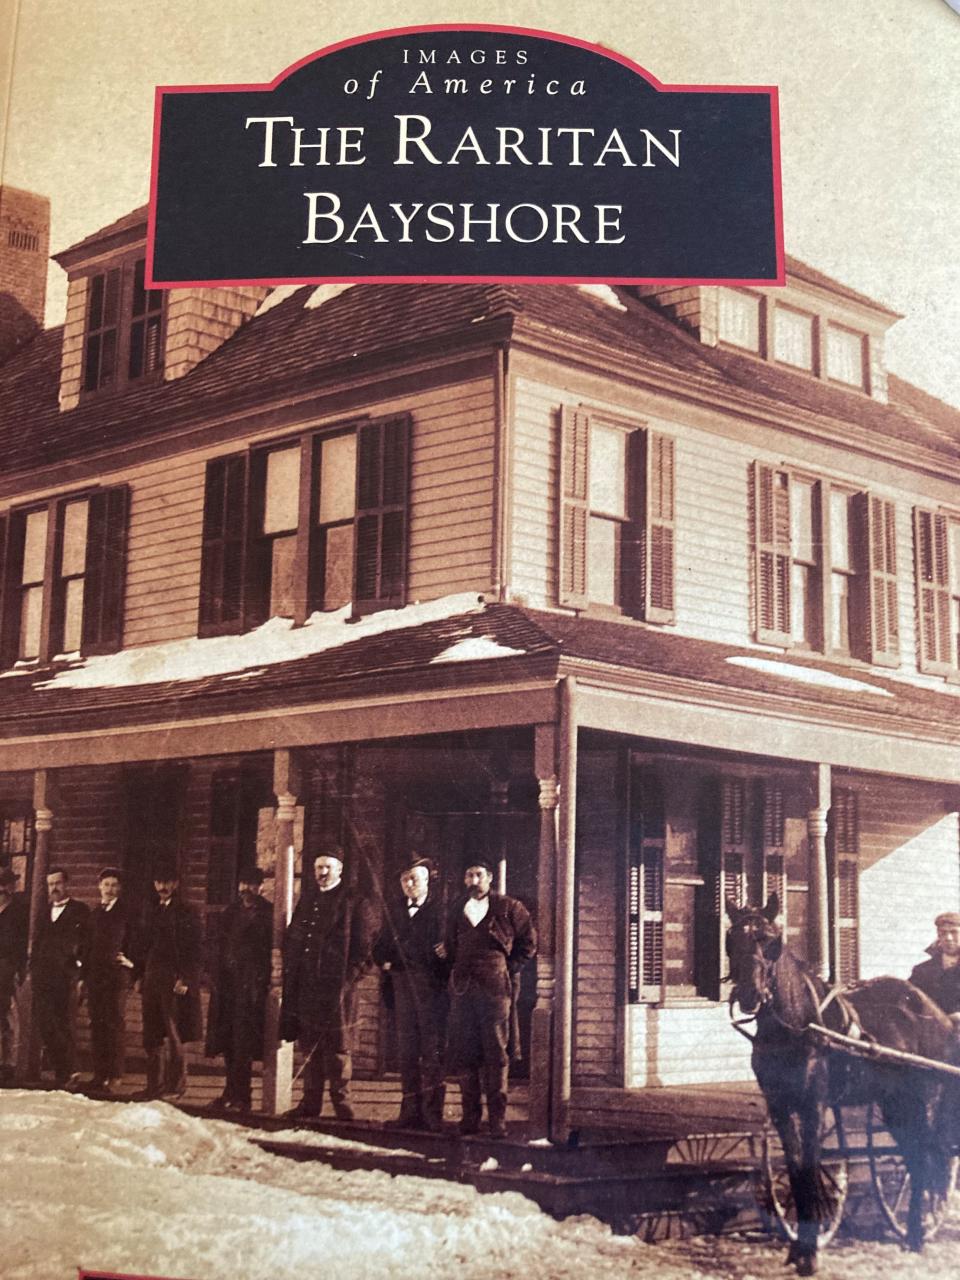 Cover of "The Raritan Bayshore" by Al Savolaine and Matt Ward.